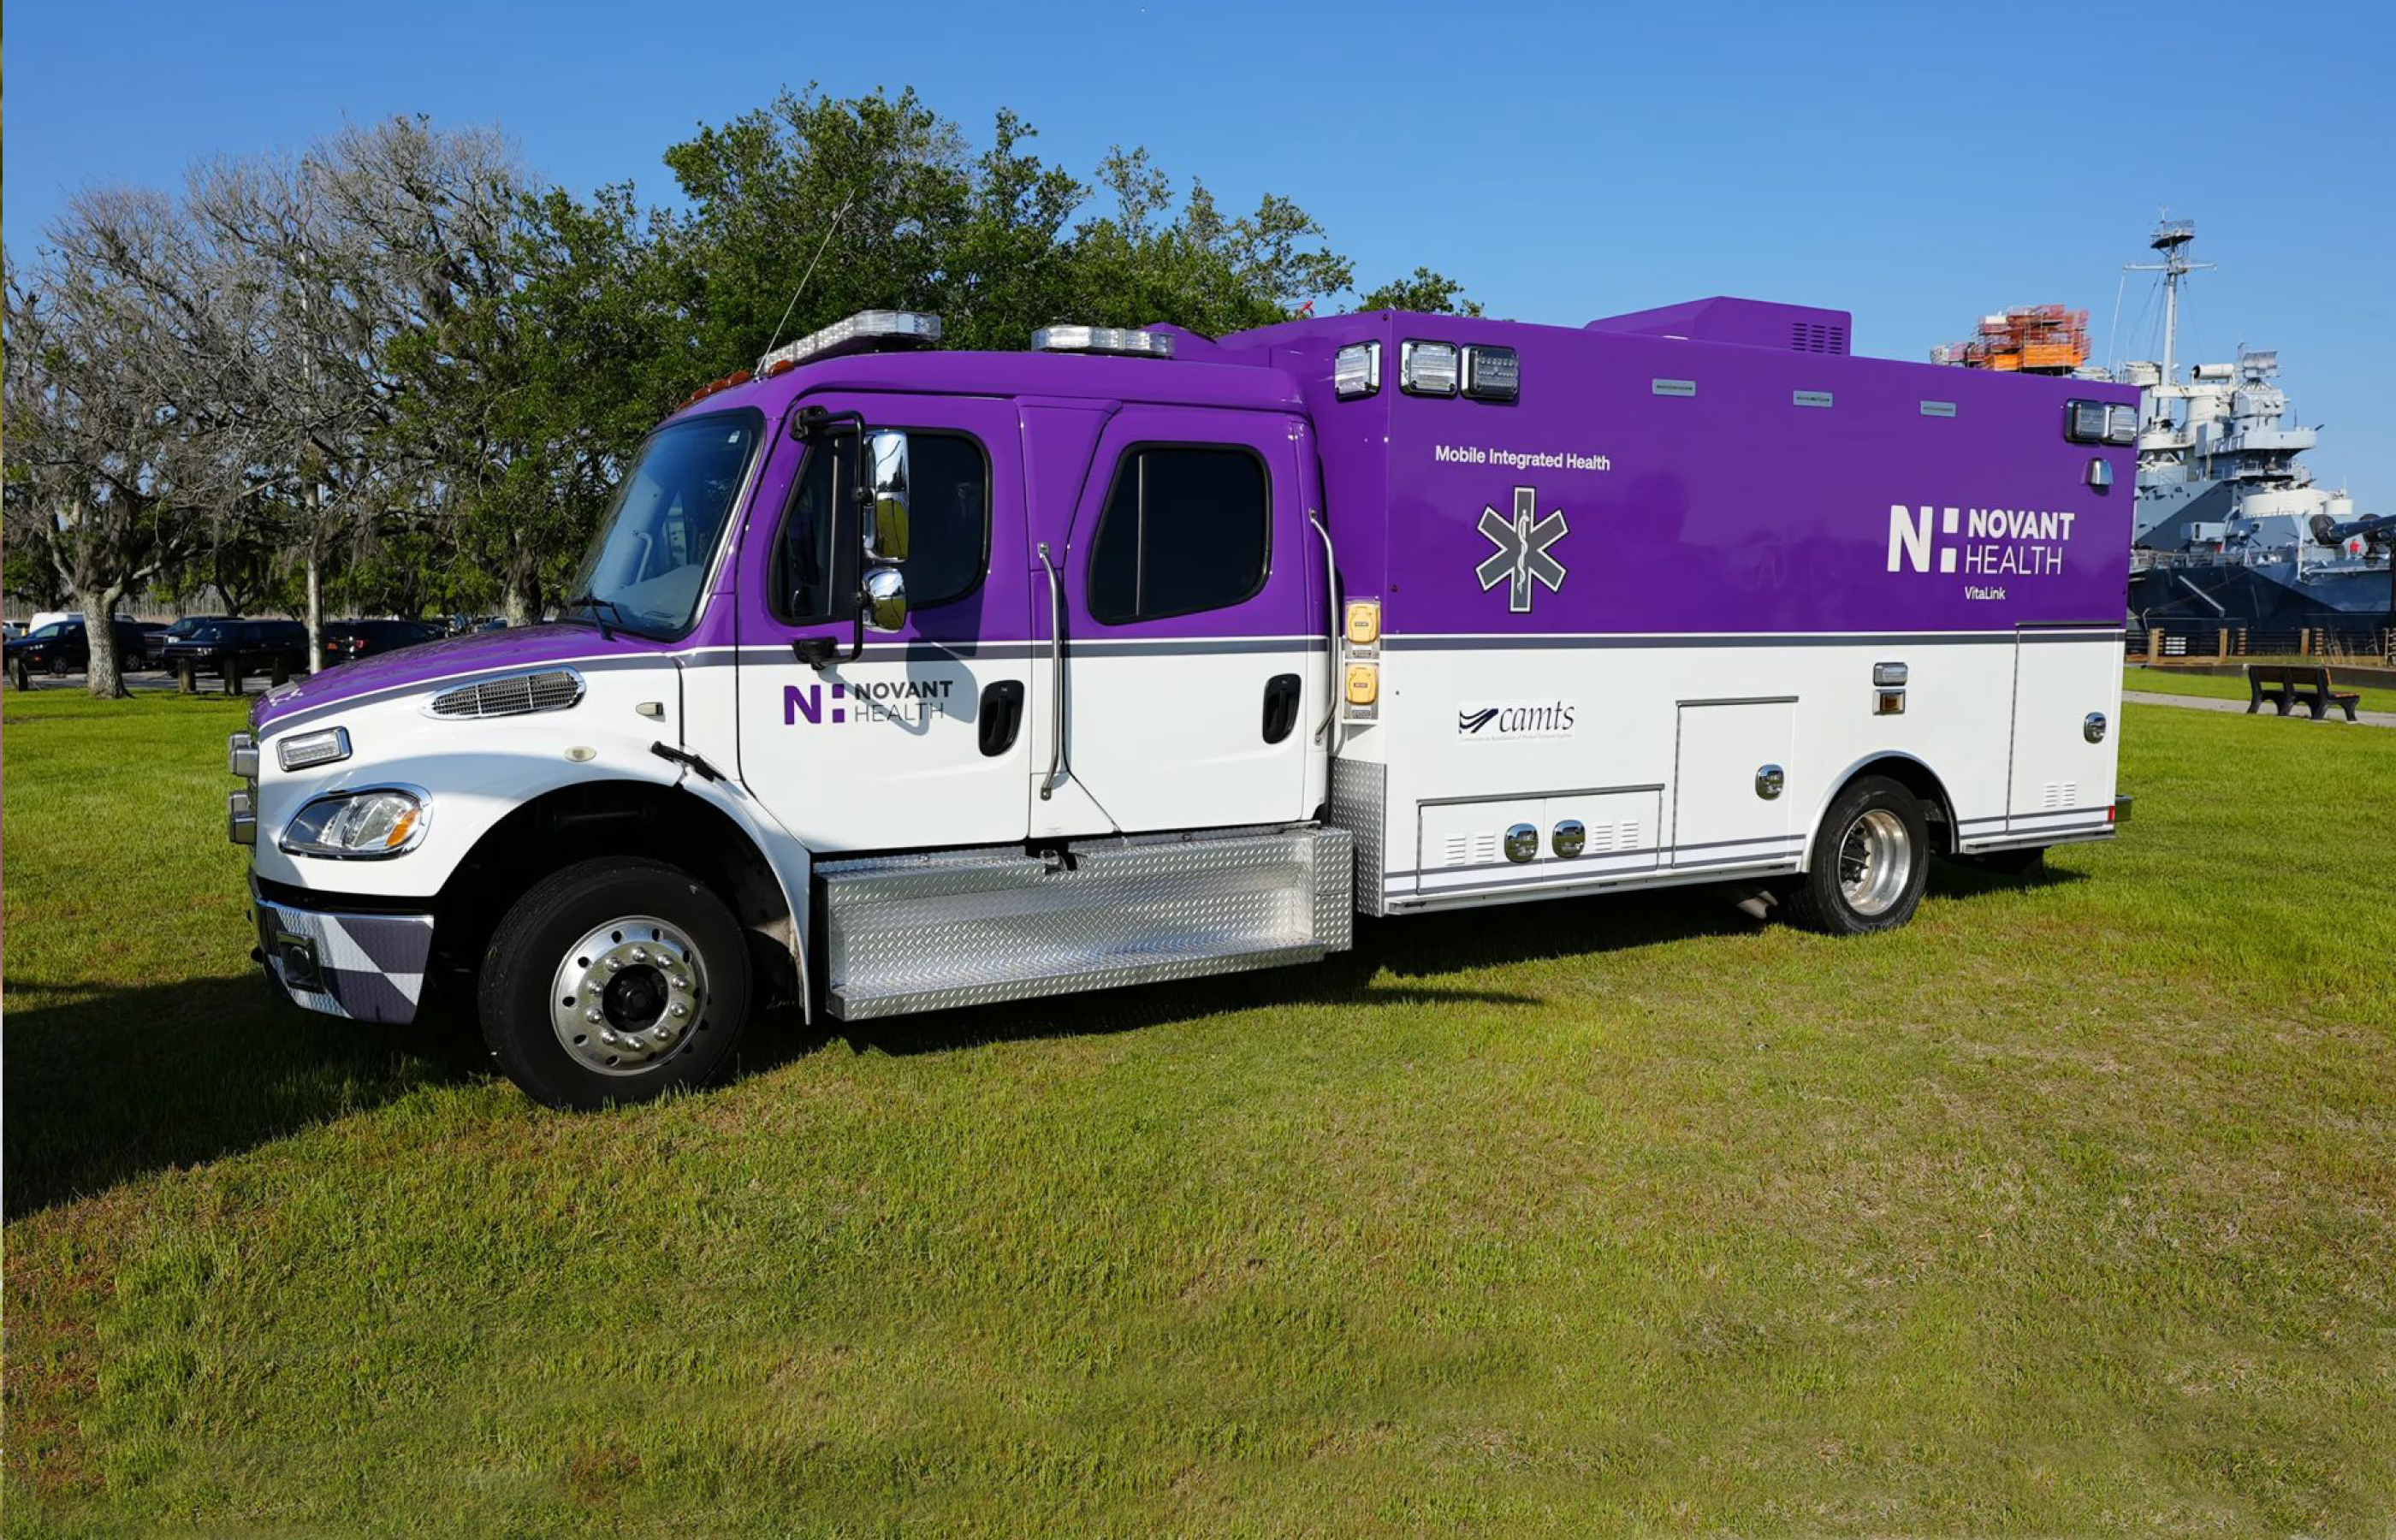 Novant Health Vitalink Ambulance at the Battleship in Wilmington, NC